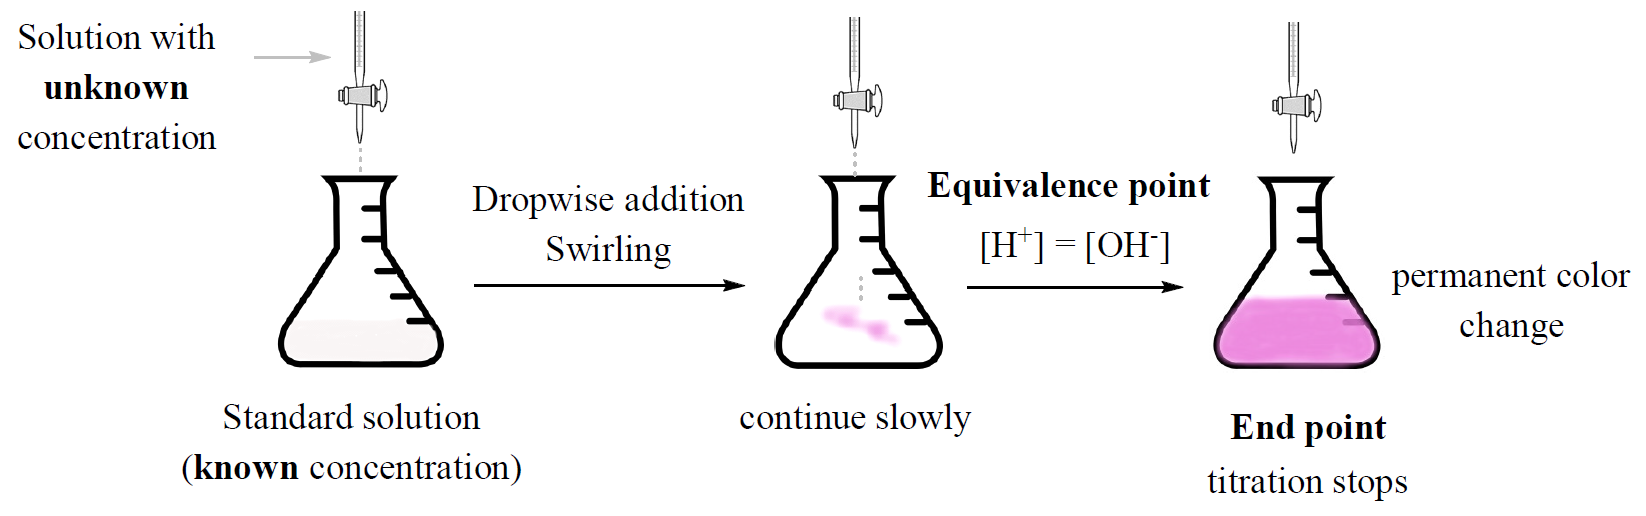 Acid base titrations concept diagram image